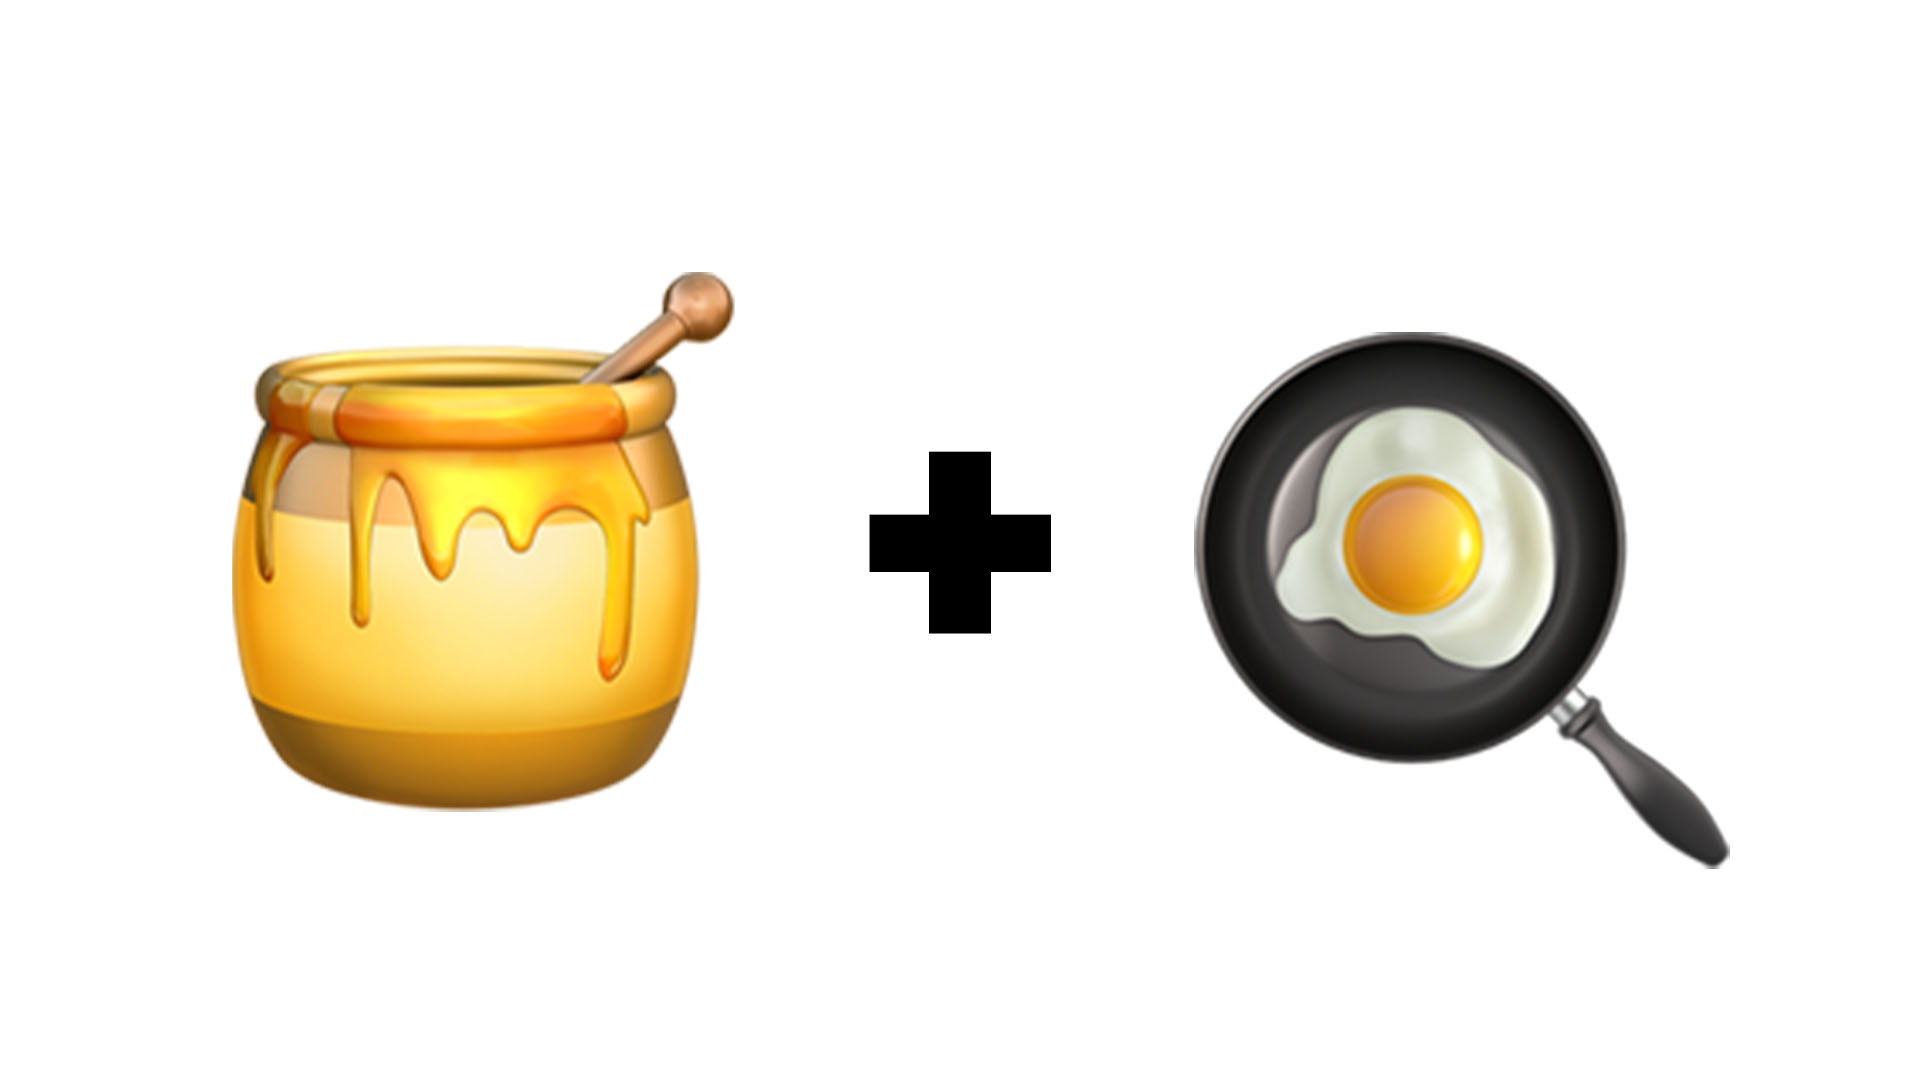 Emoji riddle 